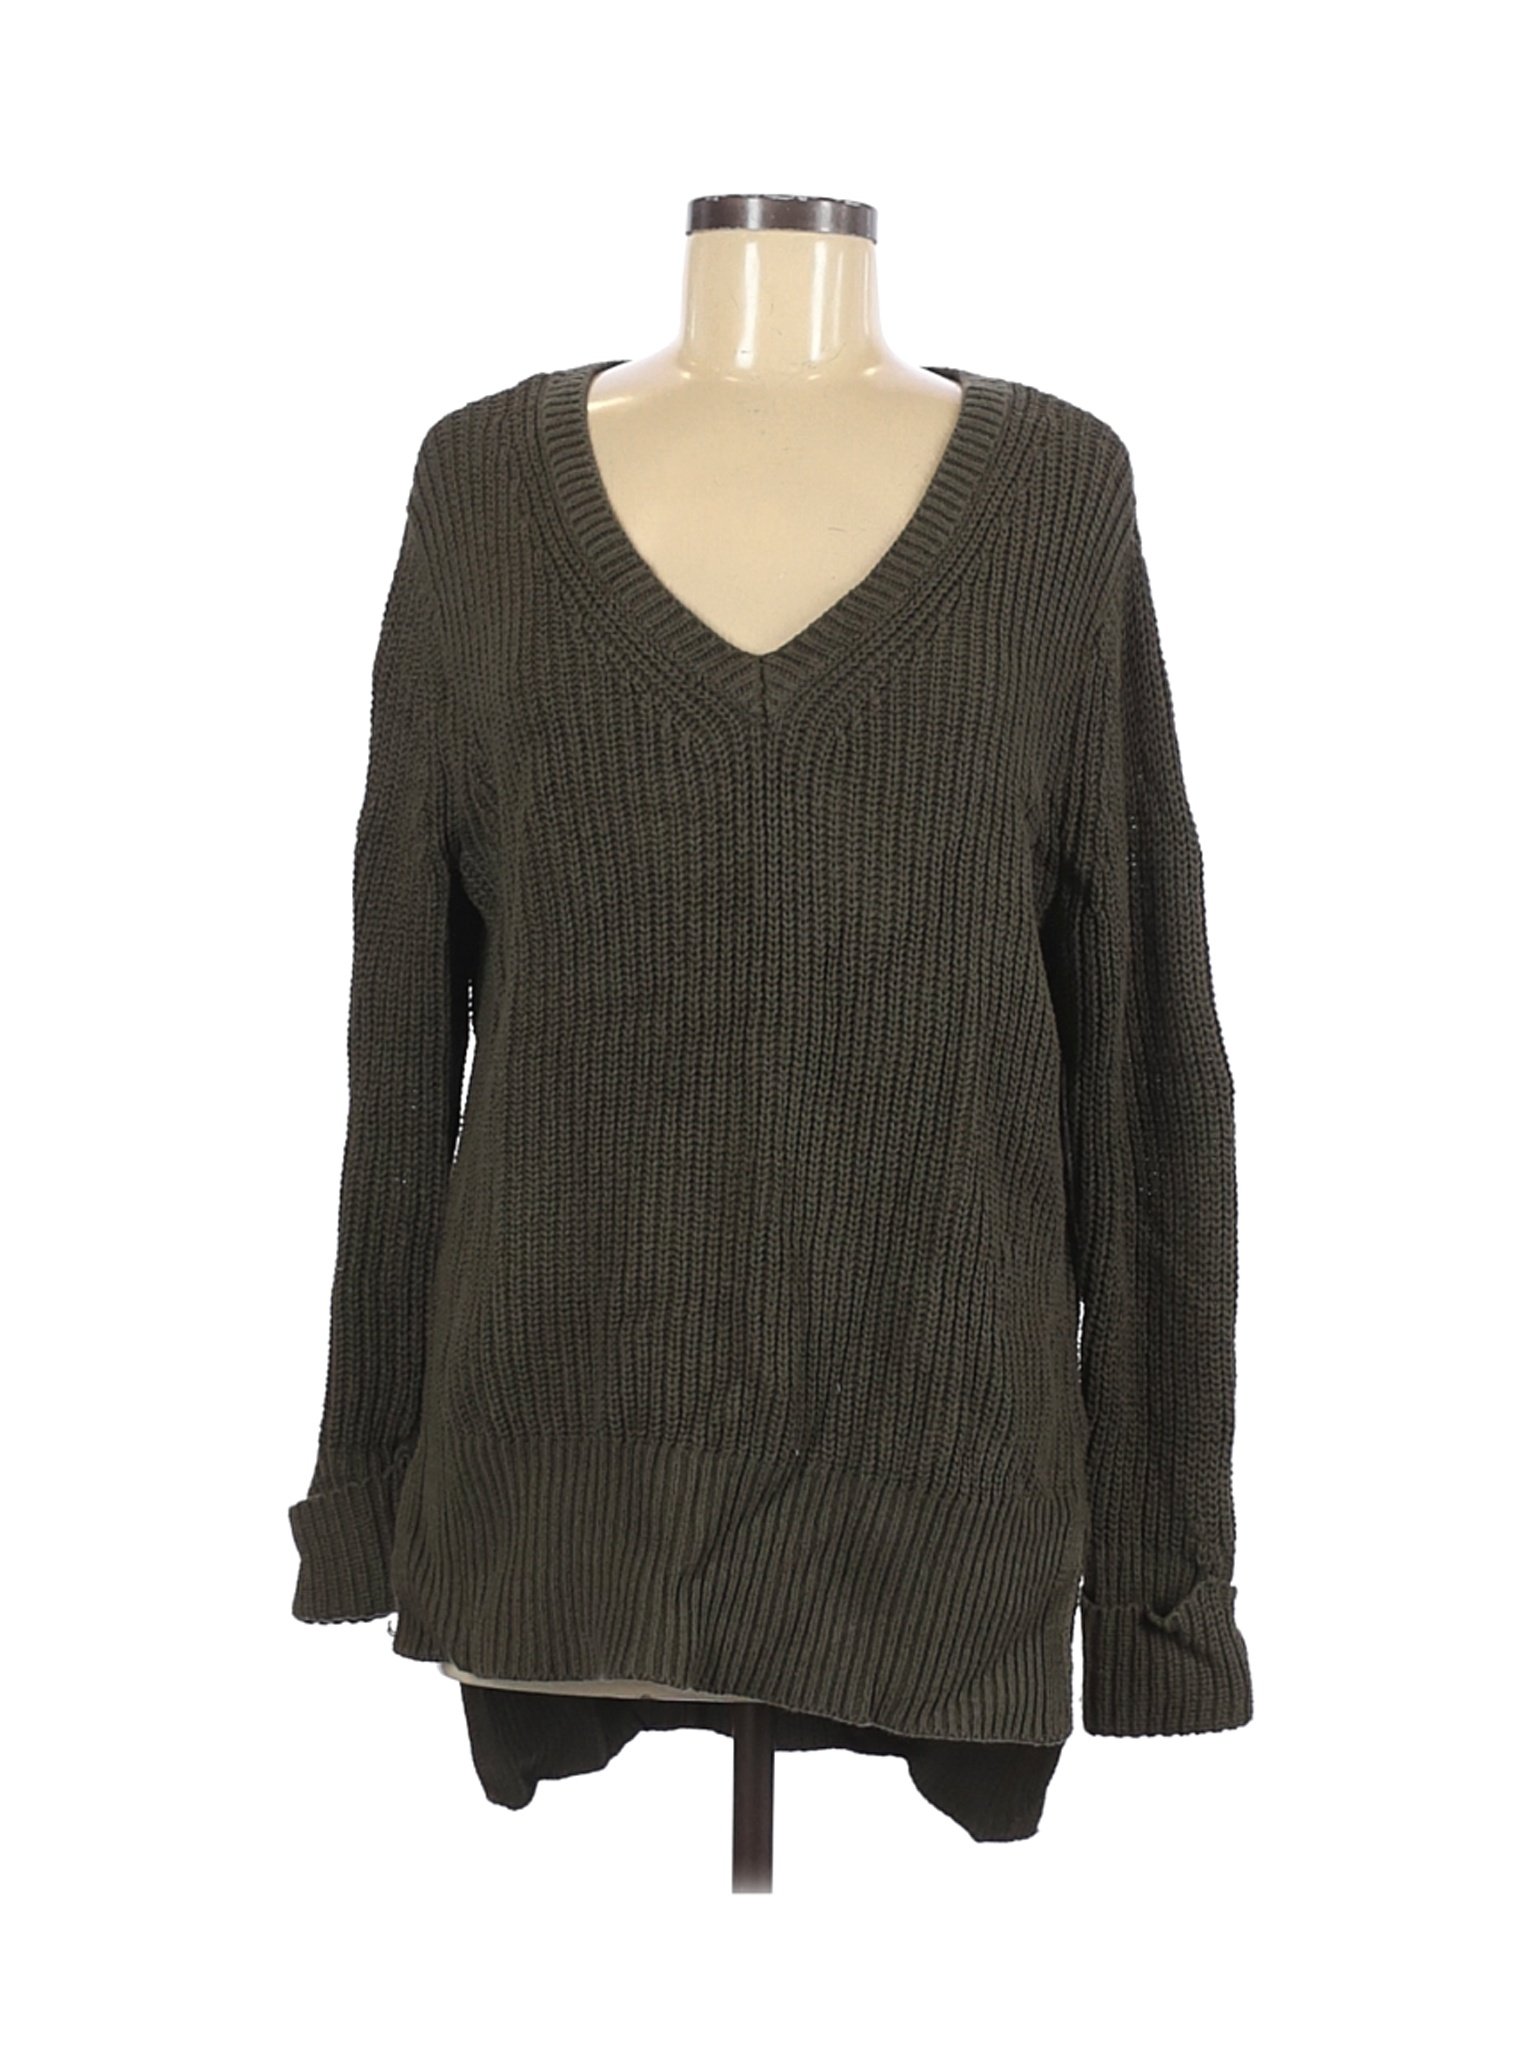 Assorted Brands Women Green Pullover Sweater M | eBay